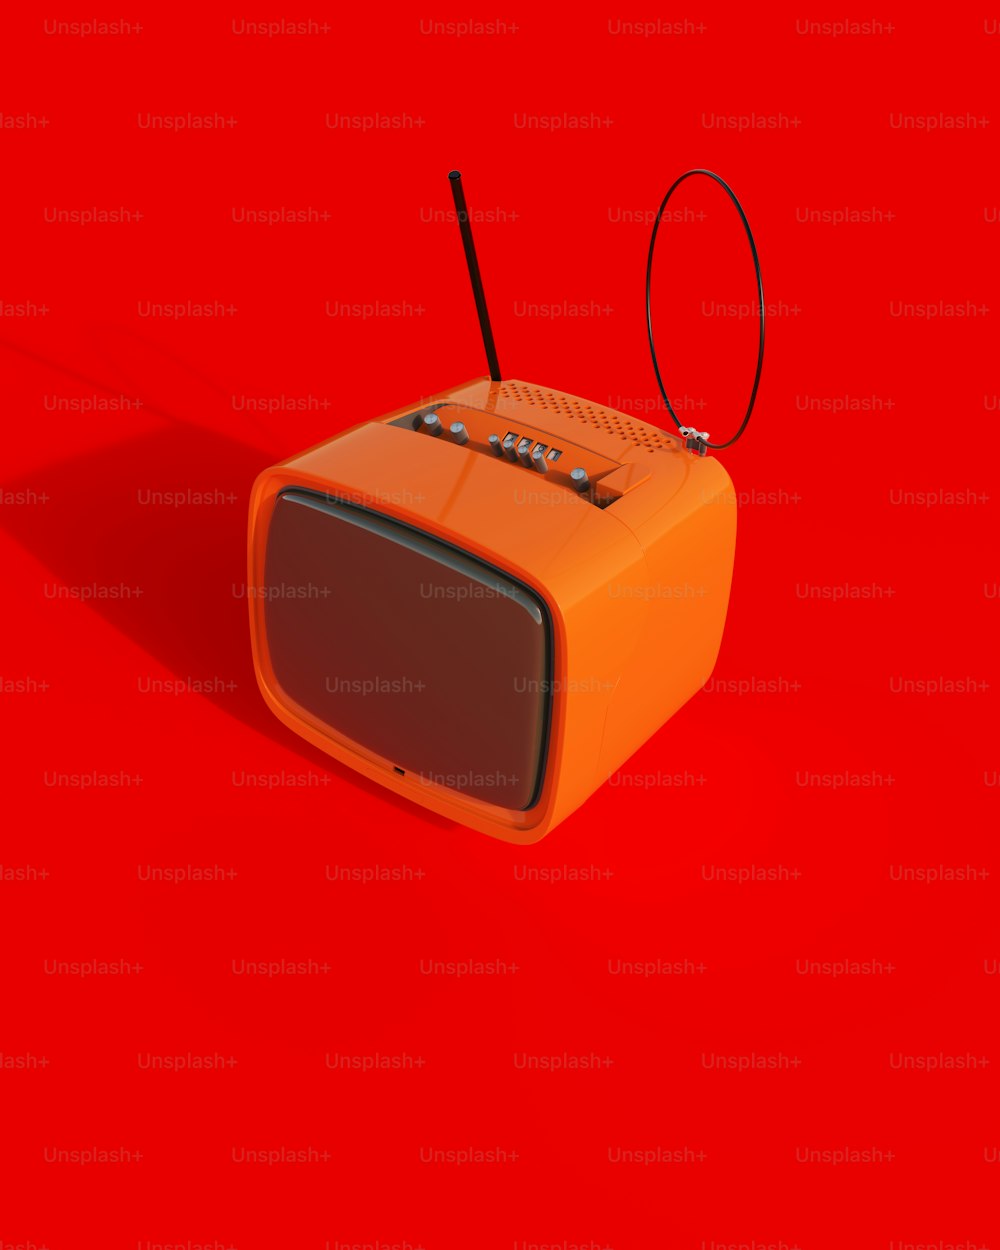 Una radio arancione seduta sopra una superficie rossa